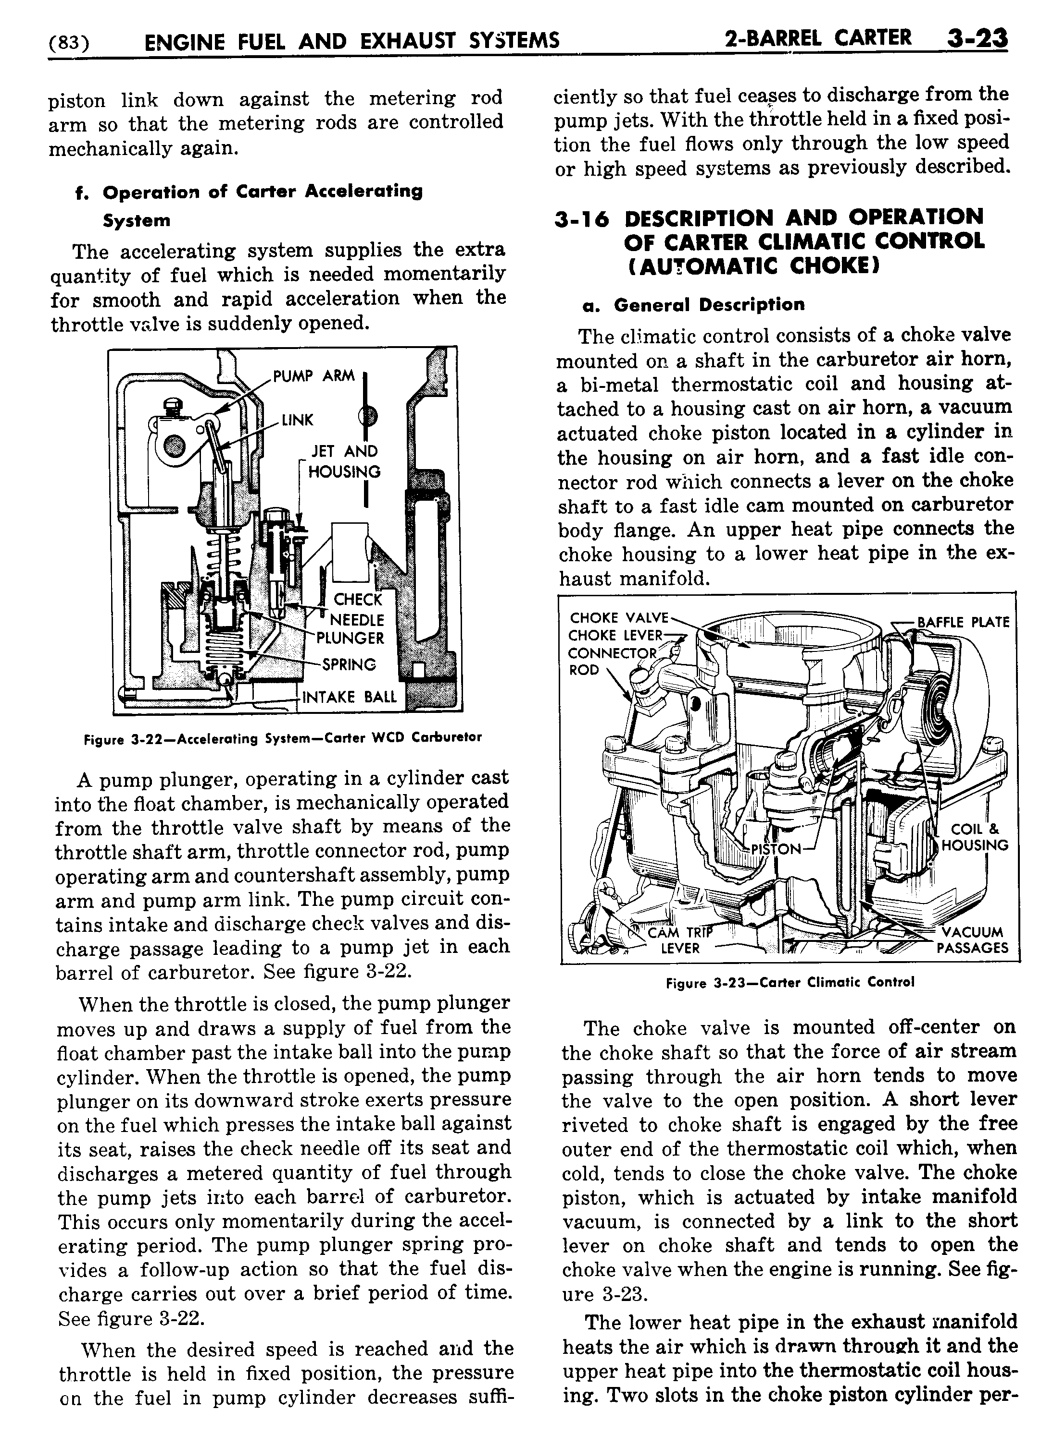 n_04 1955 Buick Shop Manual - Engine Fuel & Exhaust-023-023.jpg